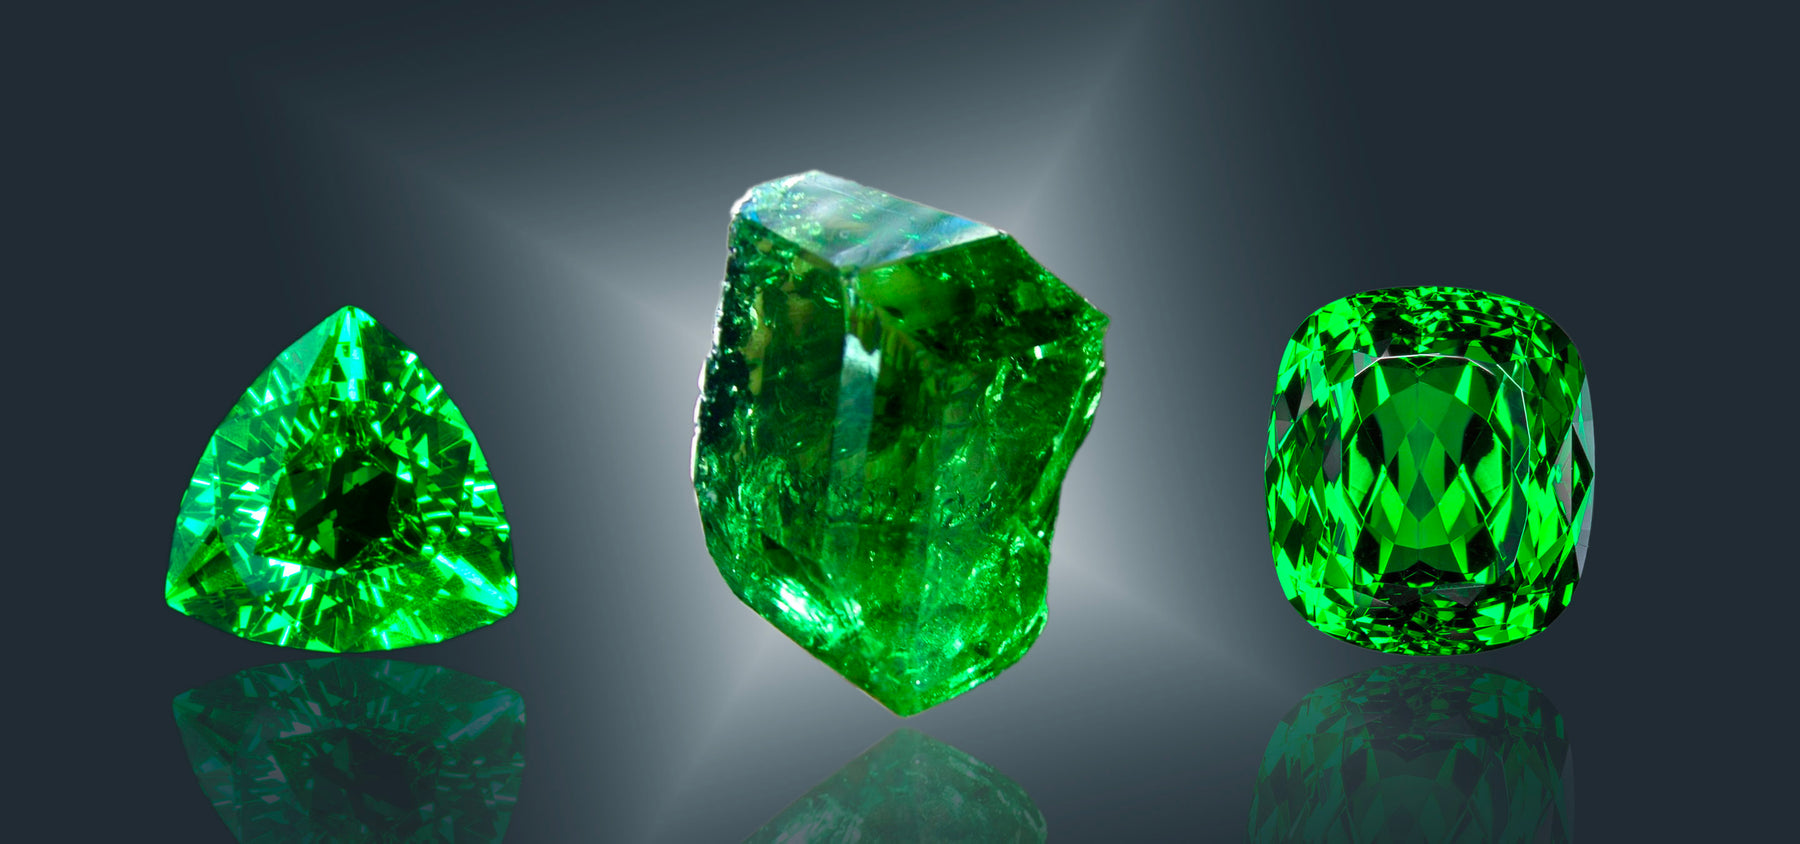 Tsavorite green garnet gemstone crystal metaphysical healing properties & meaning